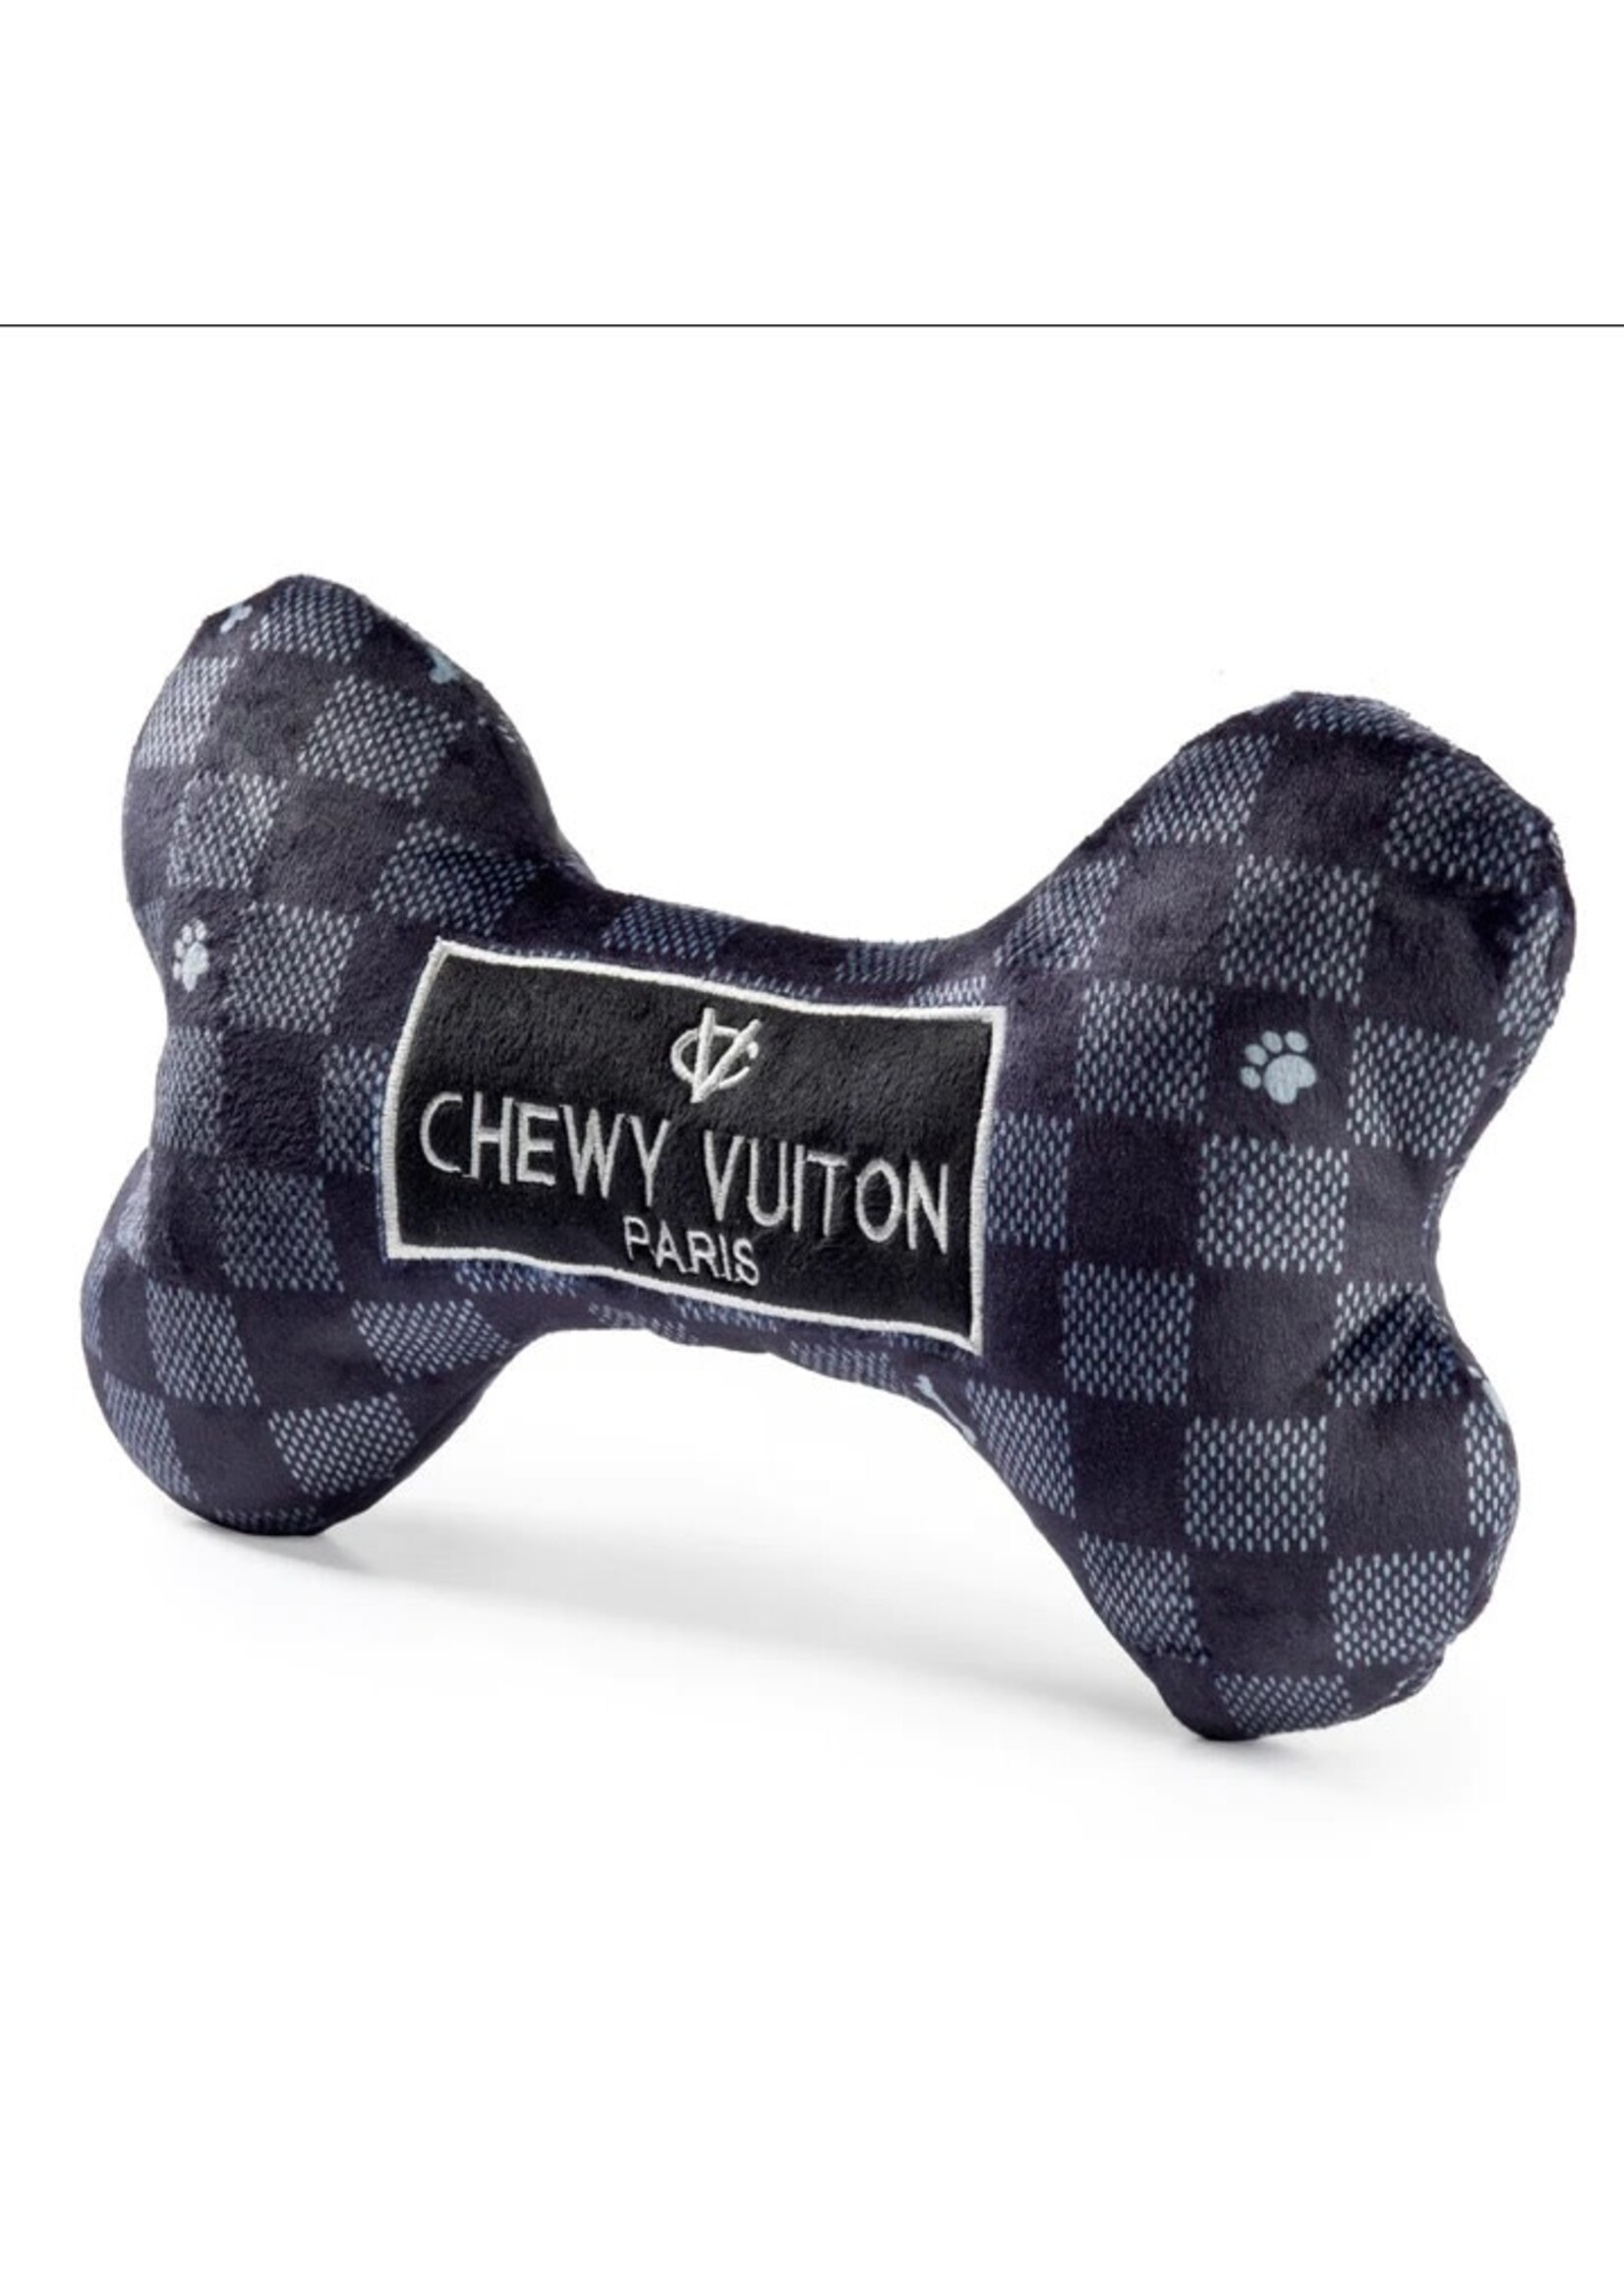 Haute Diggity Dog Black Checker Chewy Vuiton Bone Squeaker Dog Toy | Large